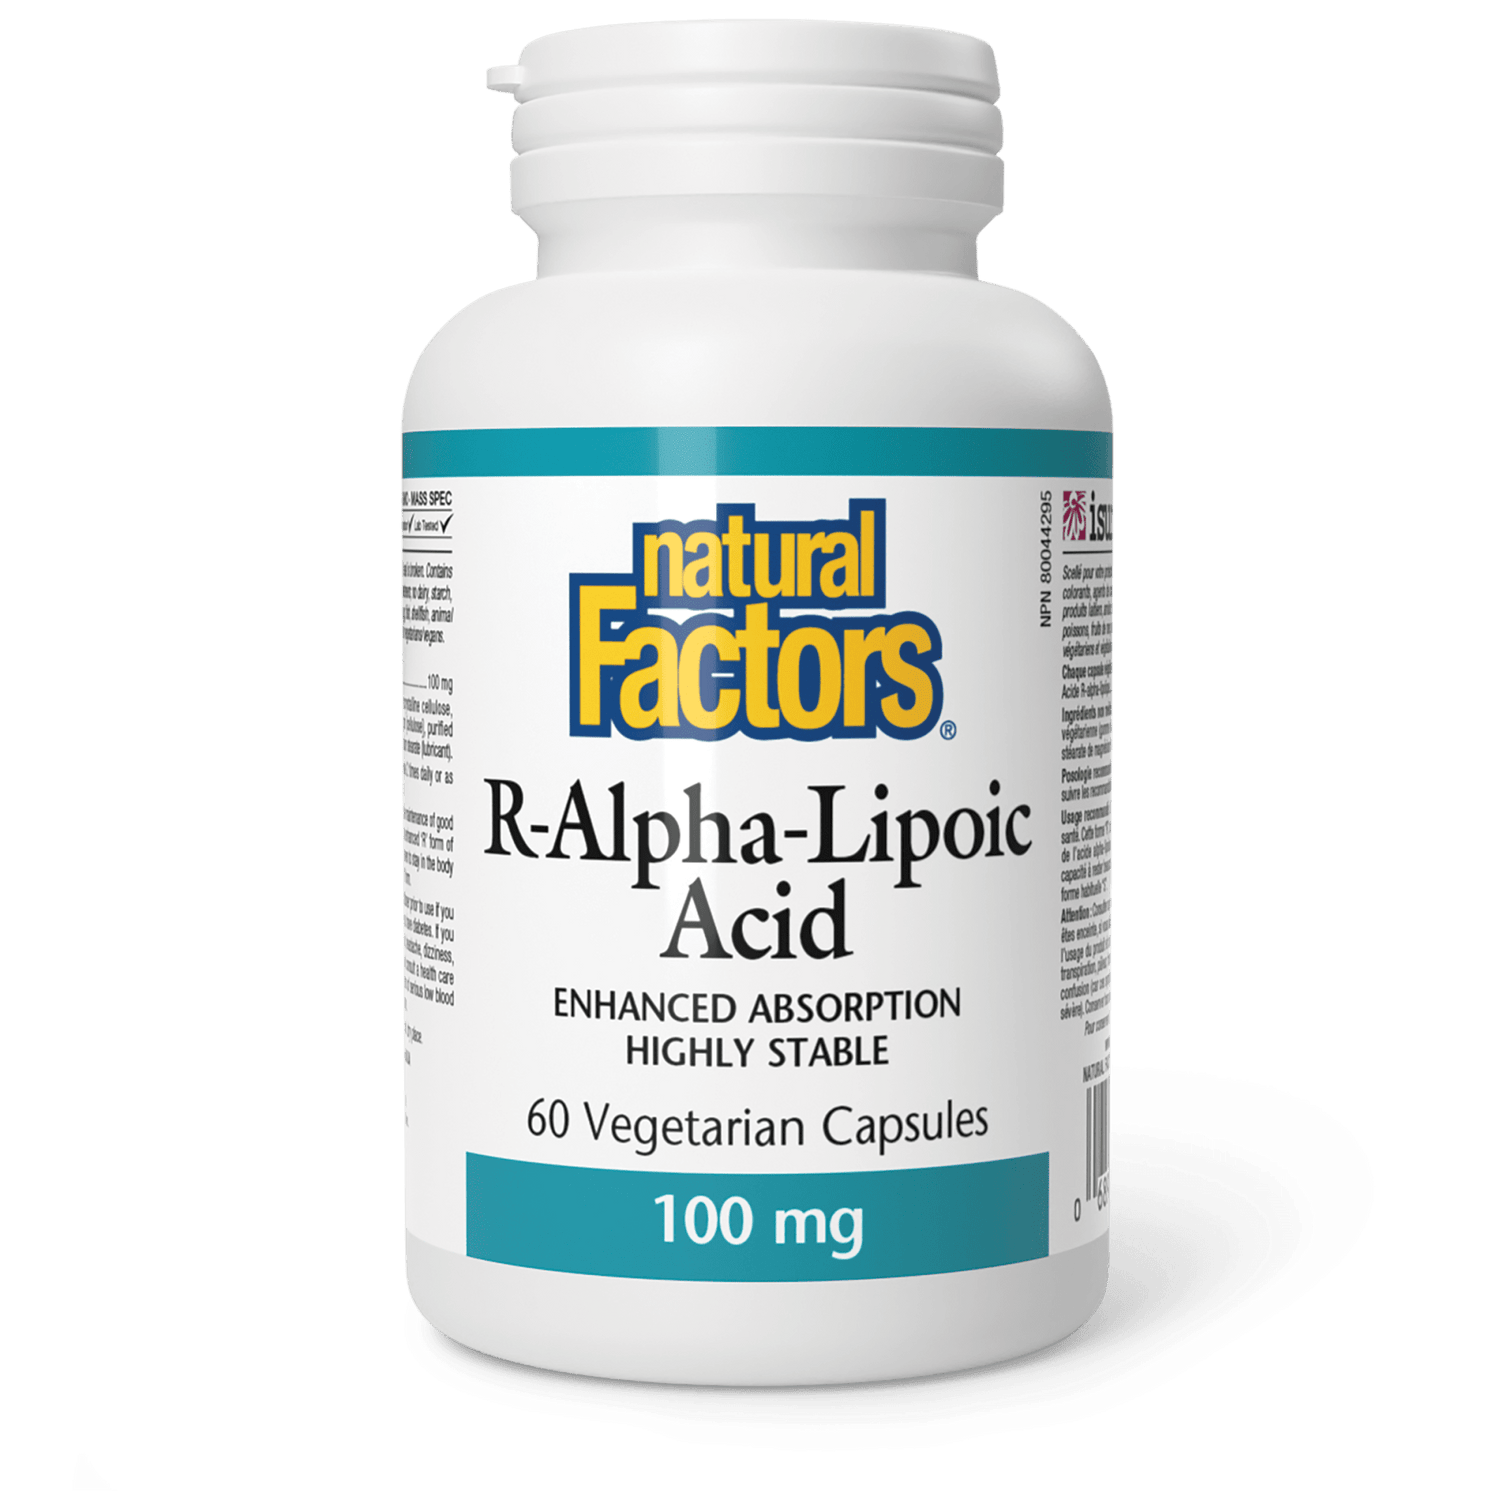 R-Alpha-Lipoic Acid 100 mg, Natural Factors|v|image|2094